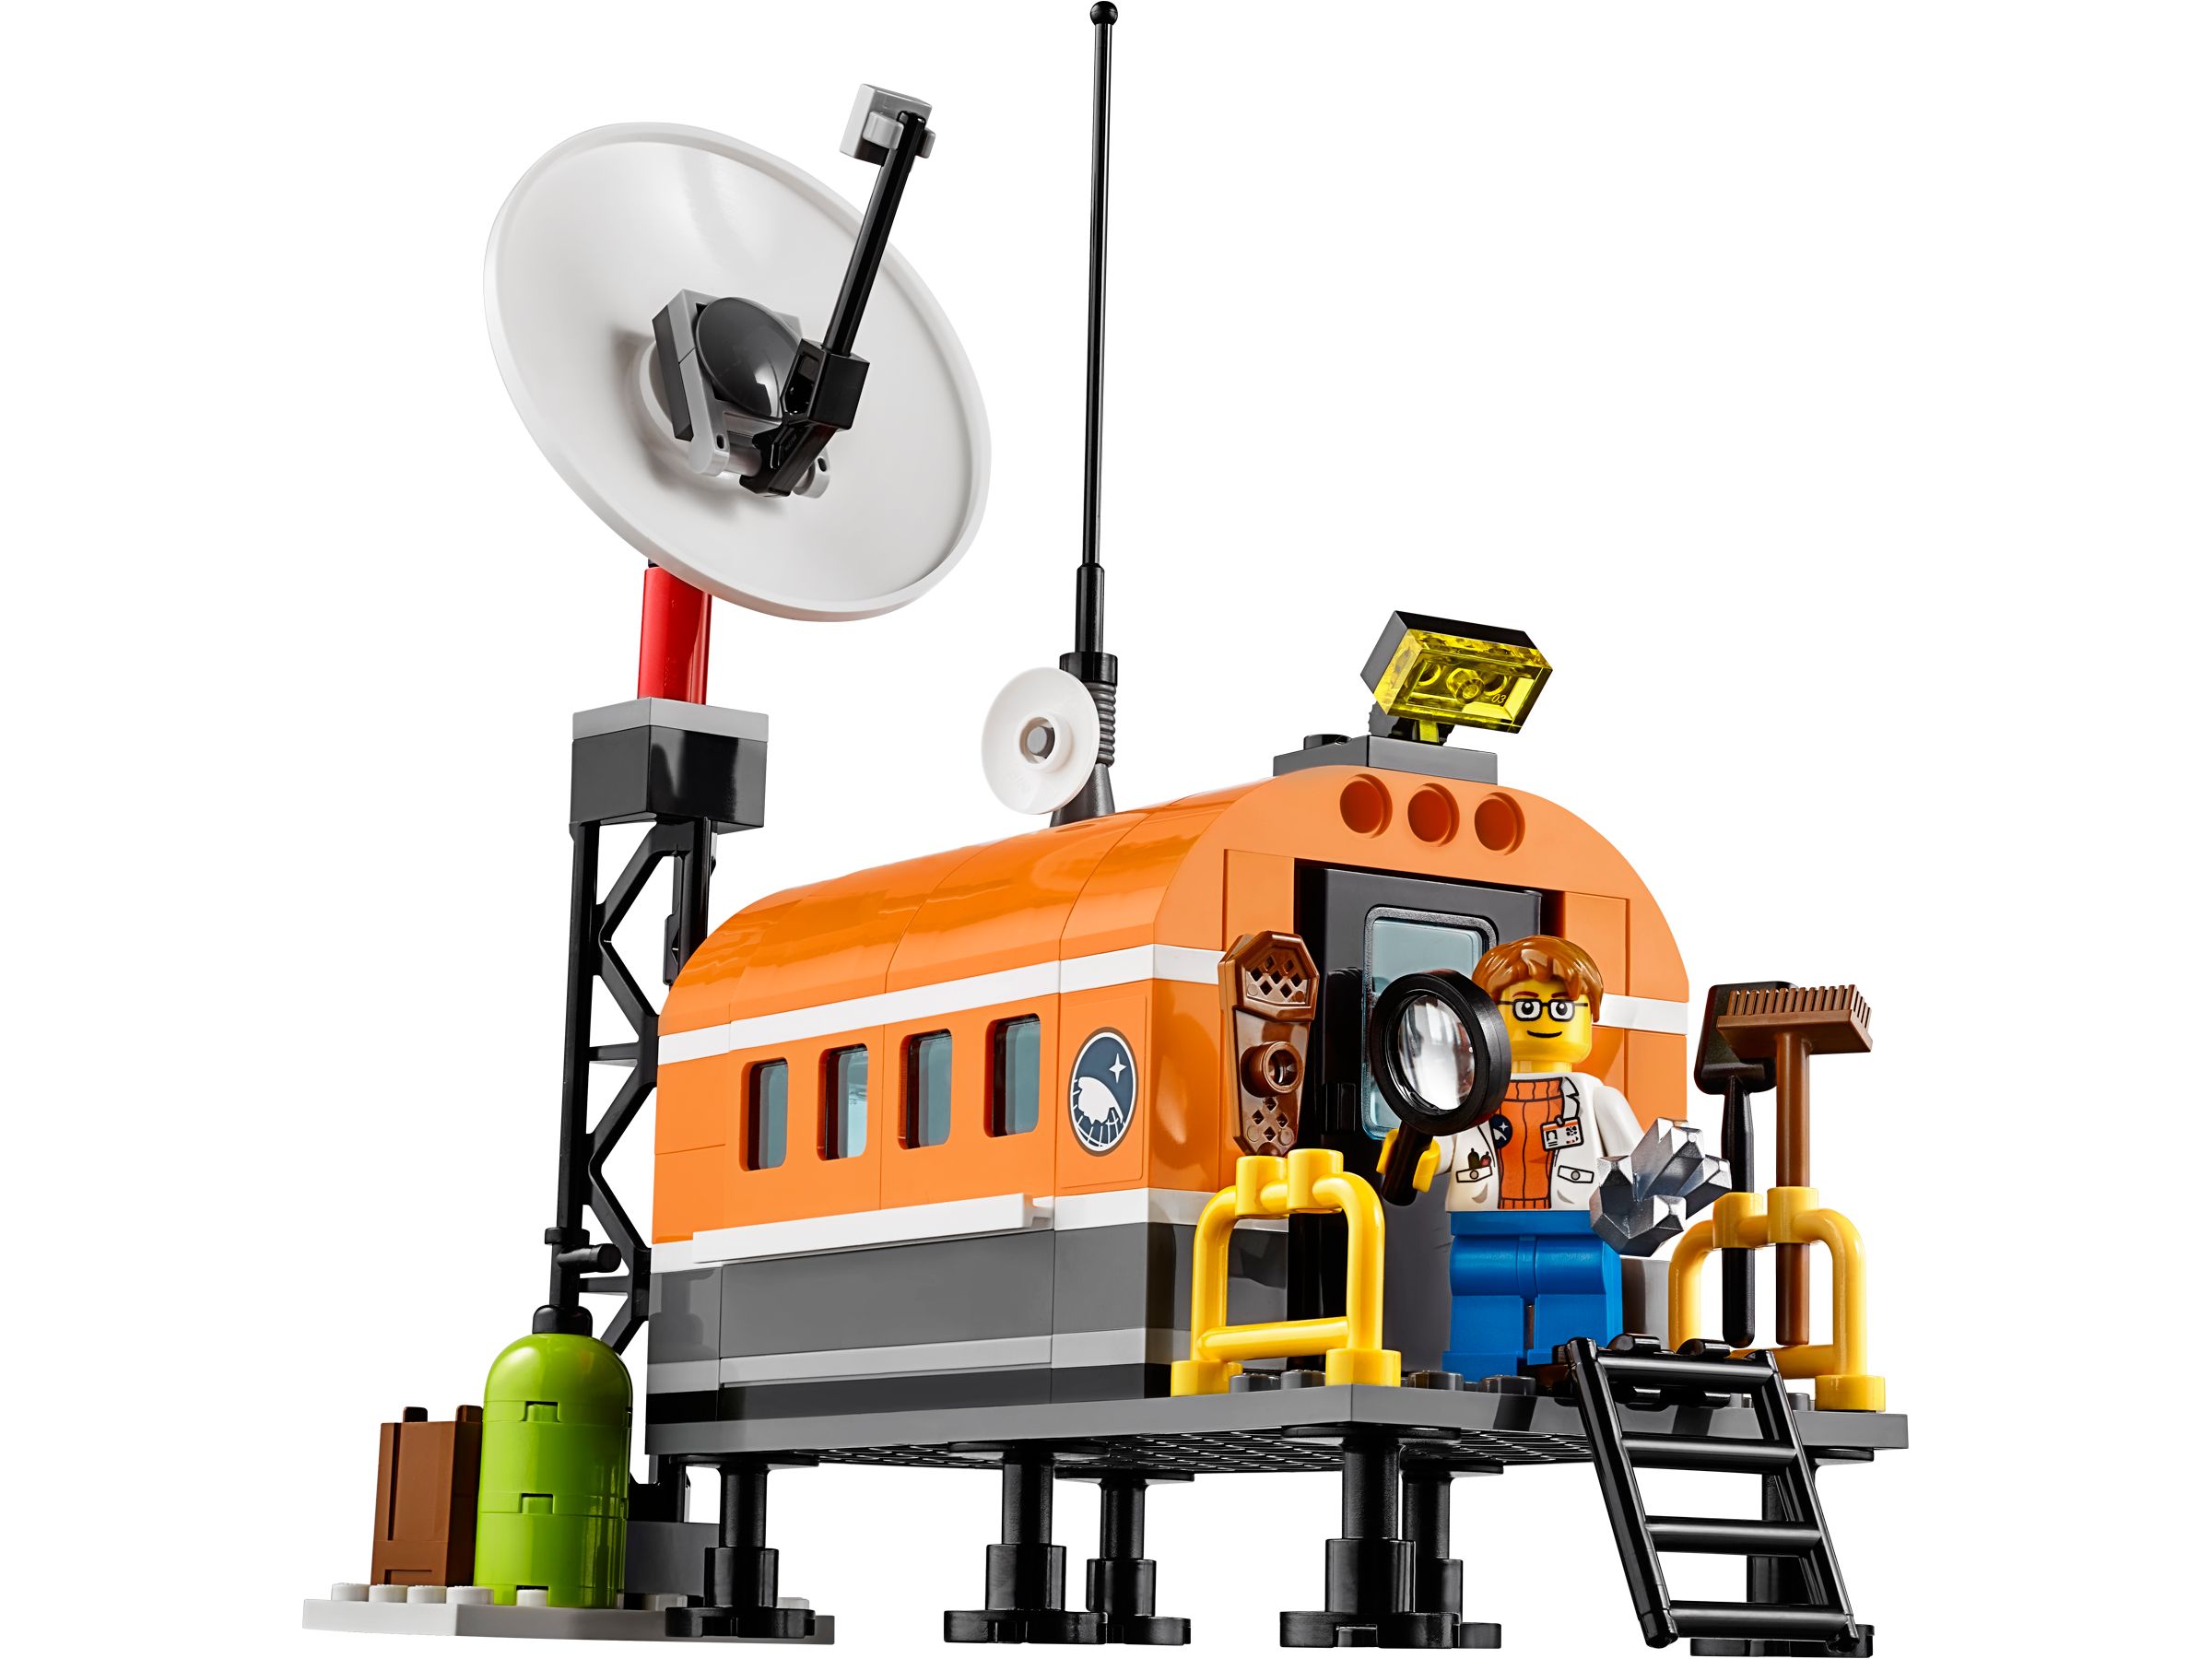 LEGO City 60062 Arktis-Eisbrecher LEGO_60062_alt3.jpg